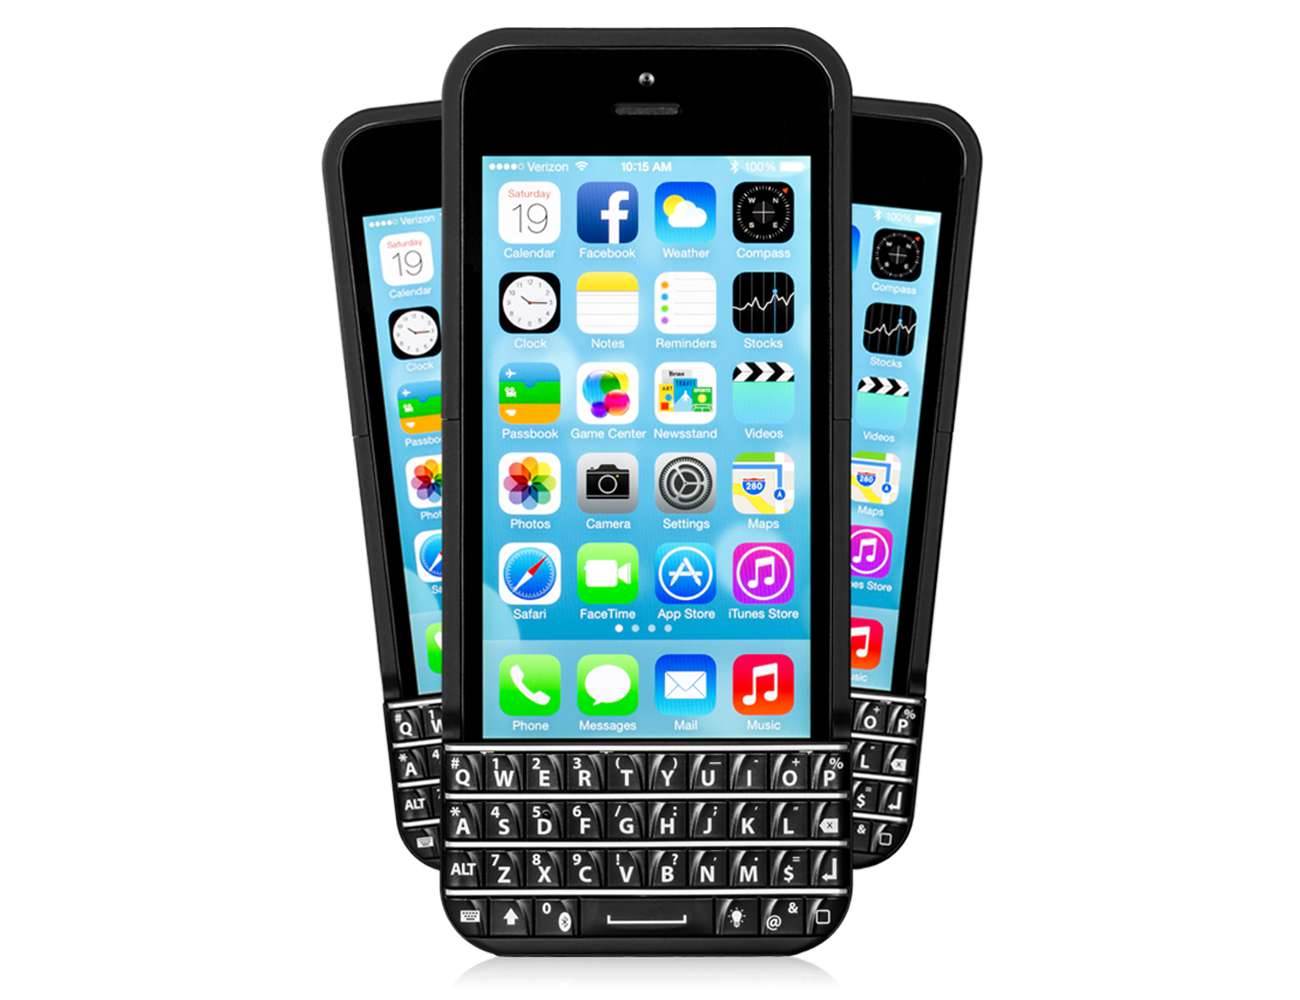 Klawiatura BlackBerry w iPhone nowosci, akcesoria Typo, klawiatura BlackBerry, klawiatura, iPhone5s, iPhone5c, iPhone5, Apple, Akcesoria   Klaw